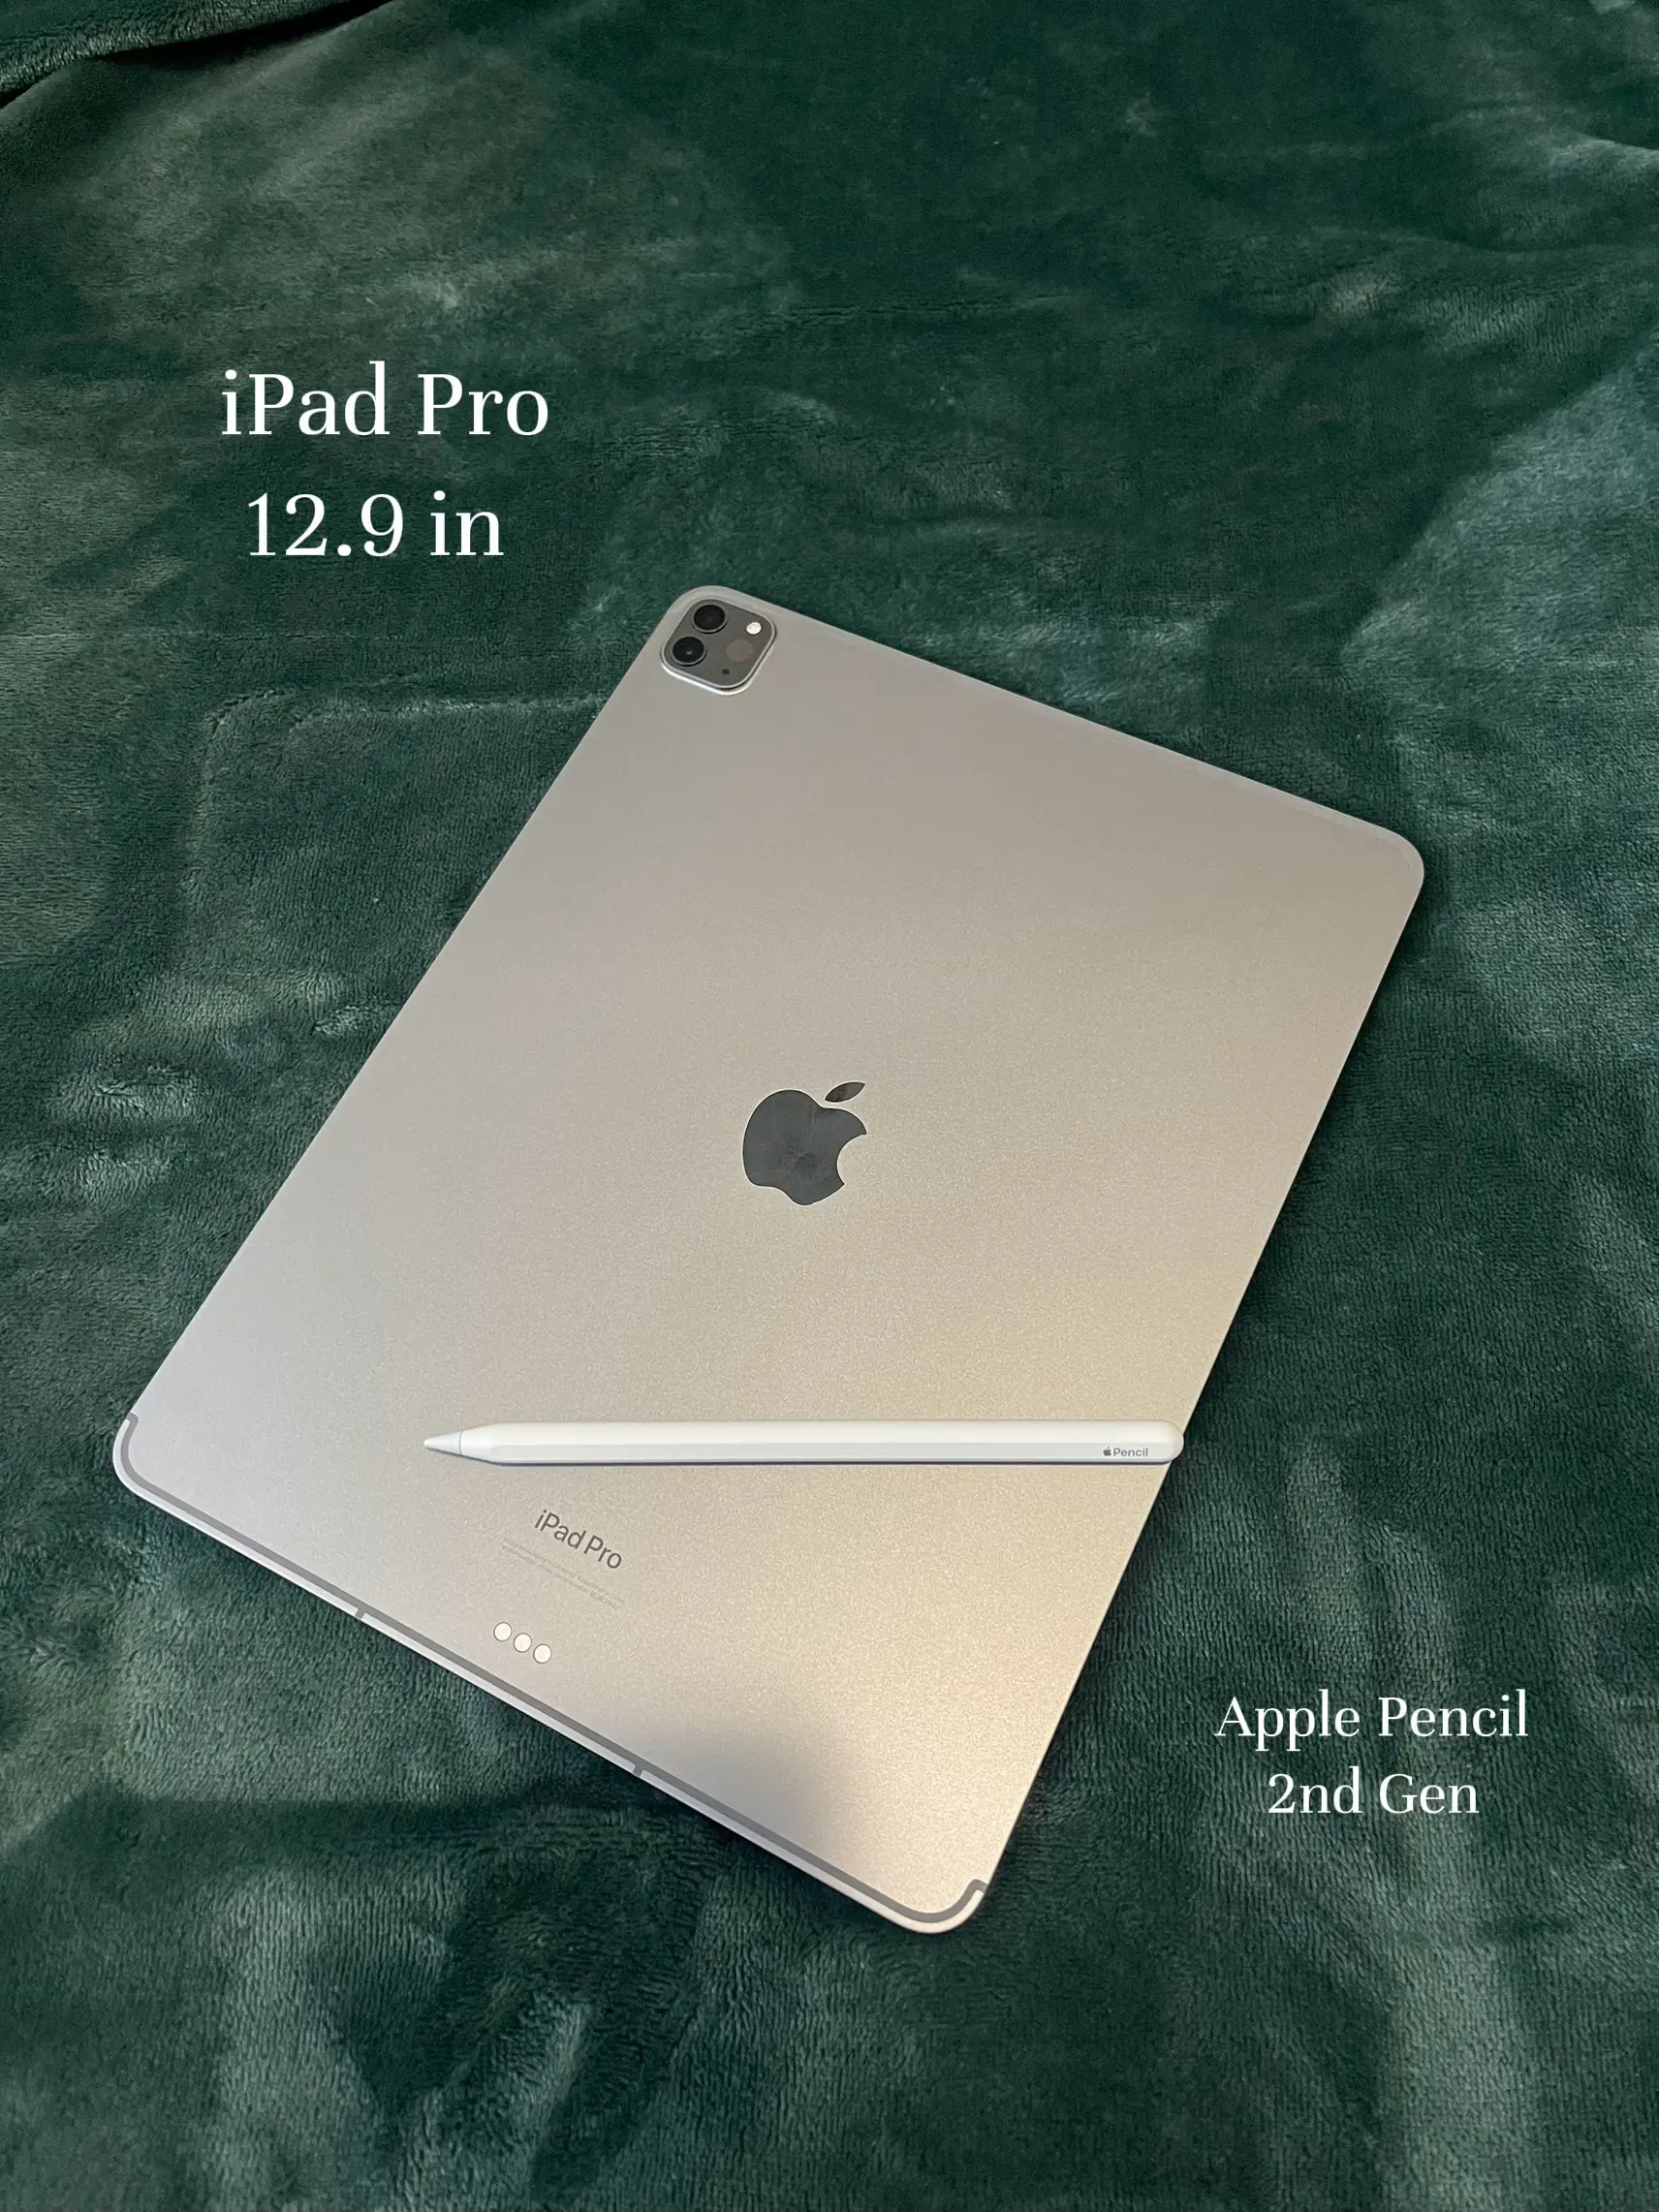 📦 m2 ipad pro 12.9 unboxing (silver) + apple pencil & accessories 💜  dream purple setup 